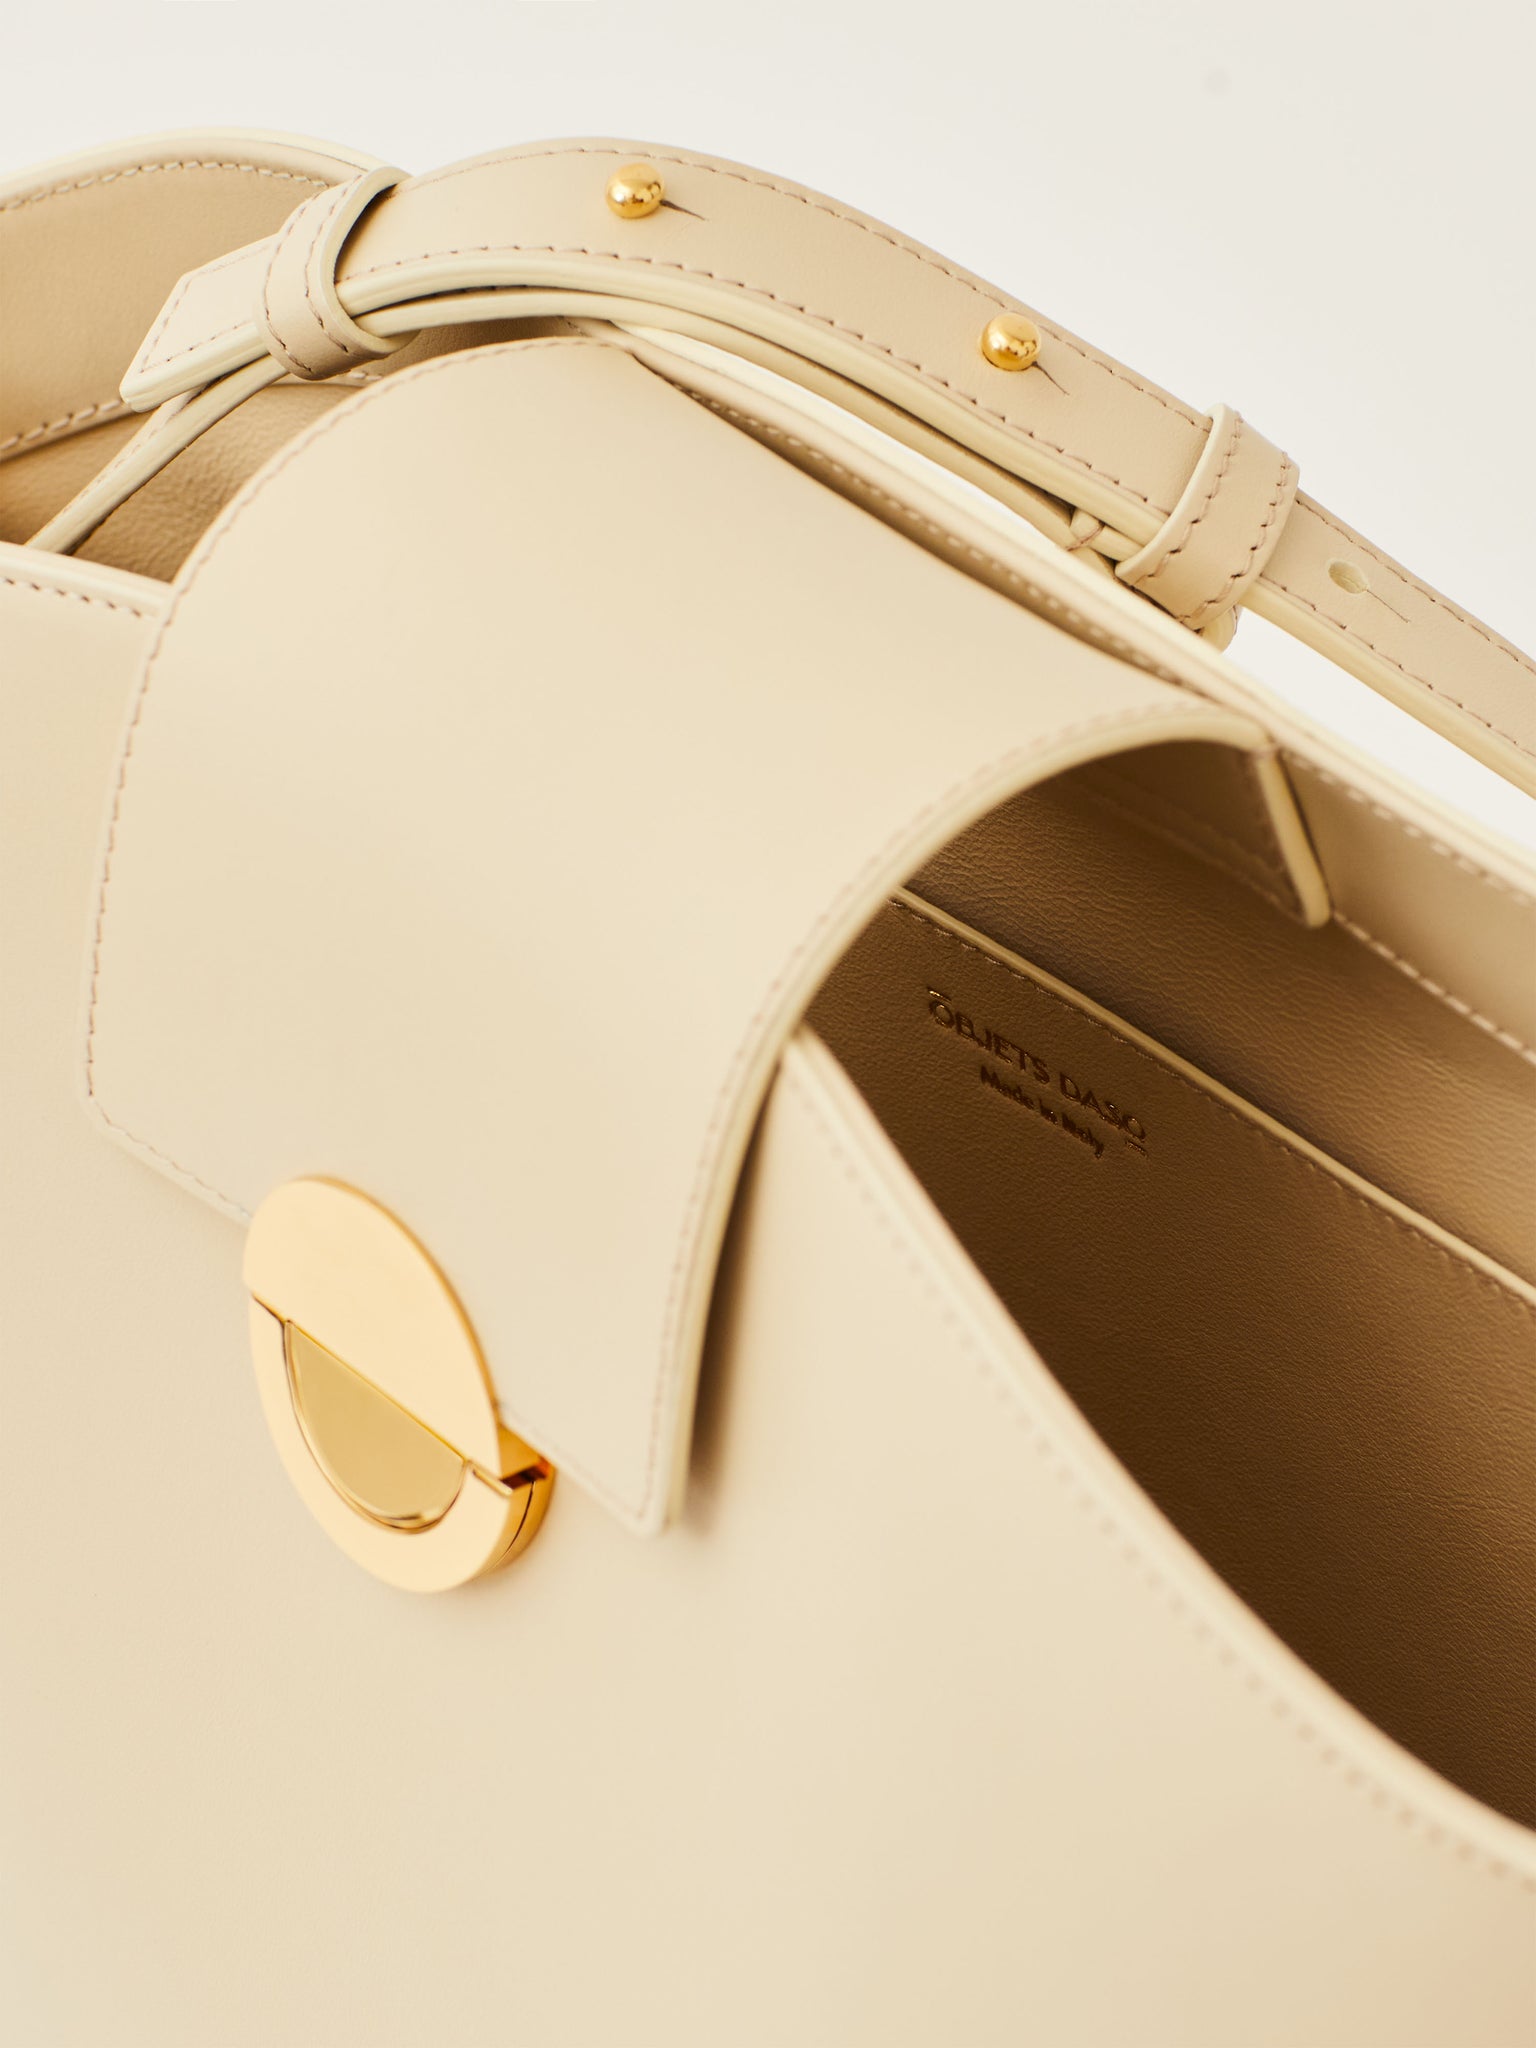 Objets Daso Ivory Leather Vivian Handbag: Close-up of Gold Signature Lock and Interior Pocket